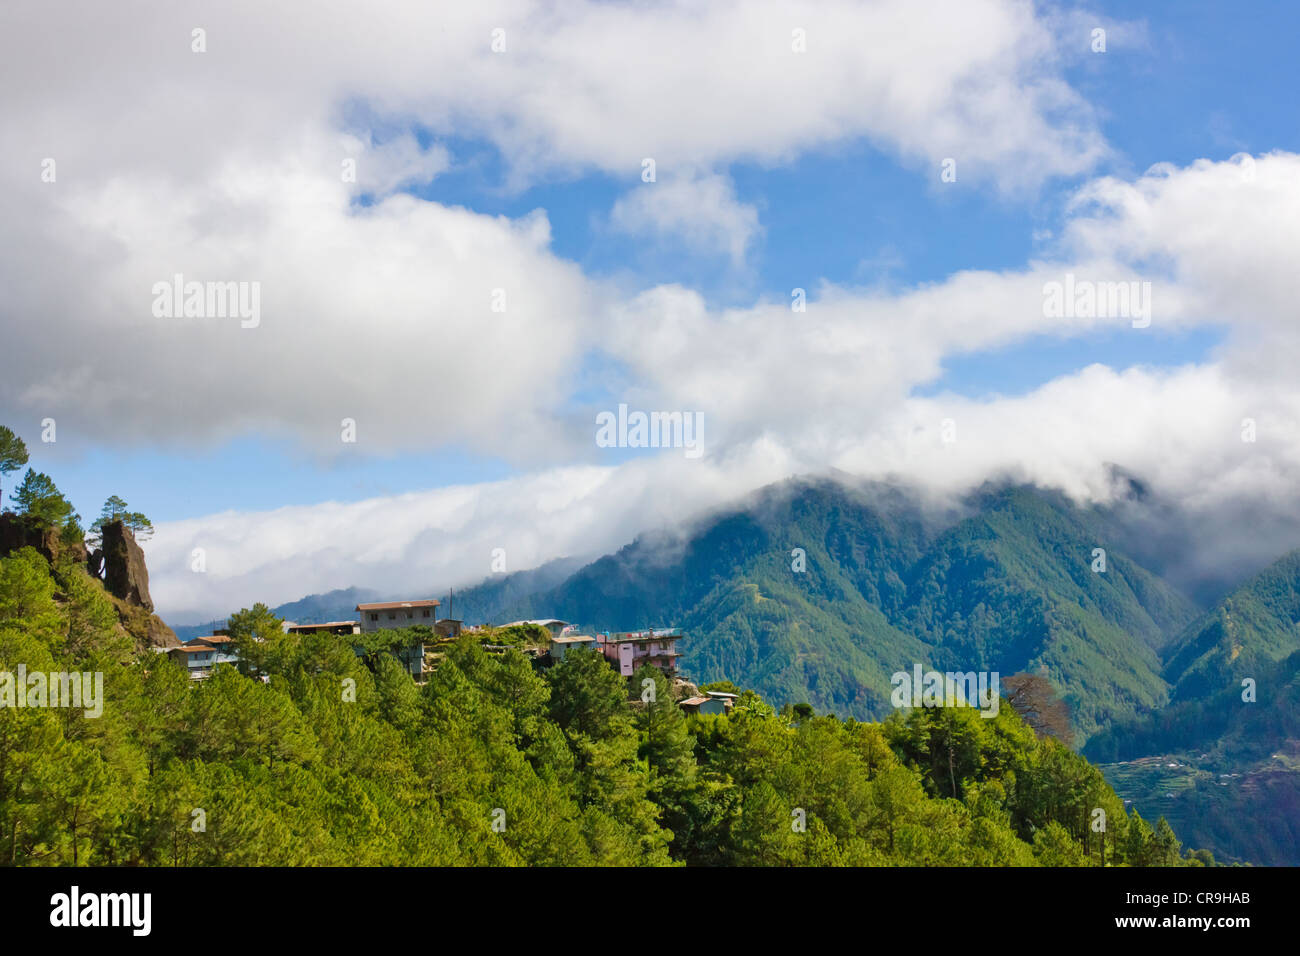 Village on hilltop, Banaue, Ifugao Province, Philippines Stock Photo